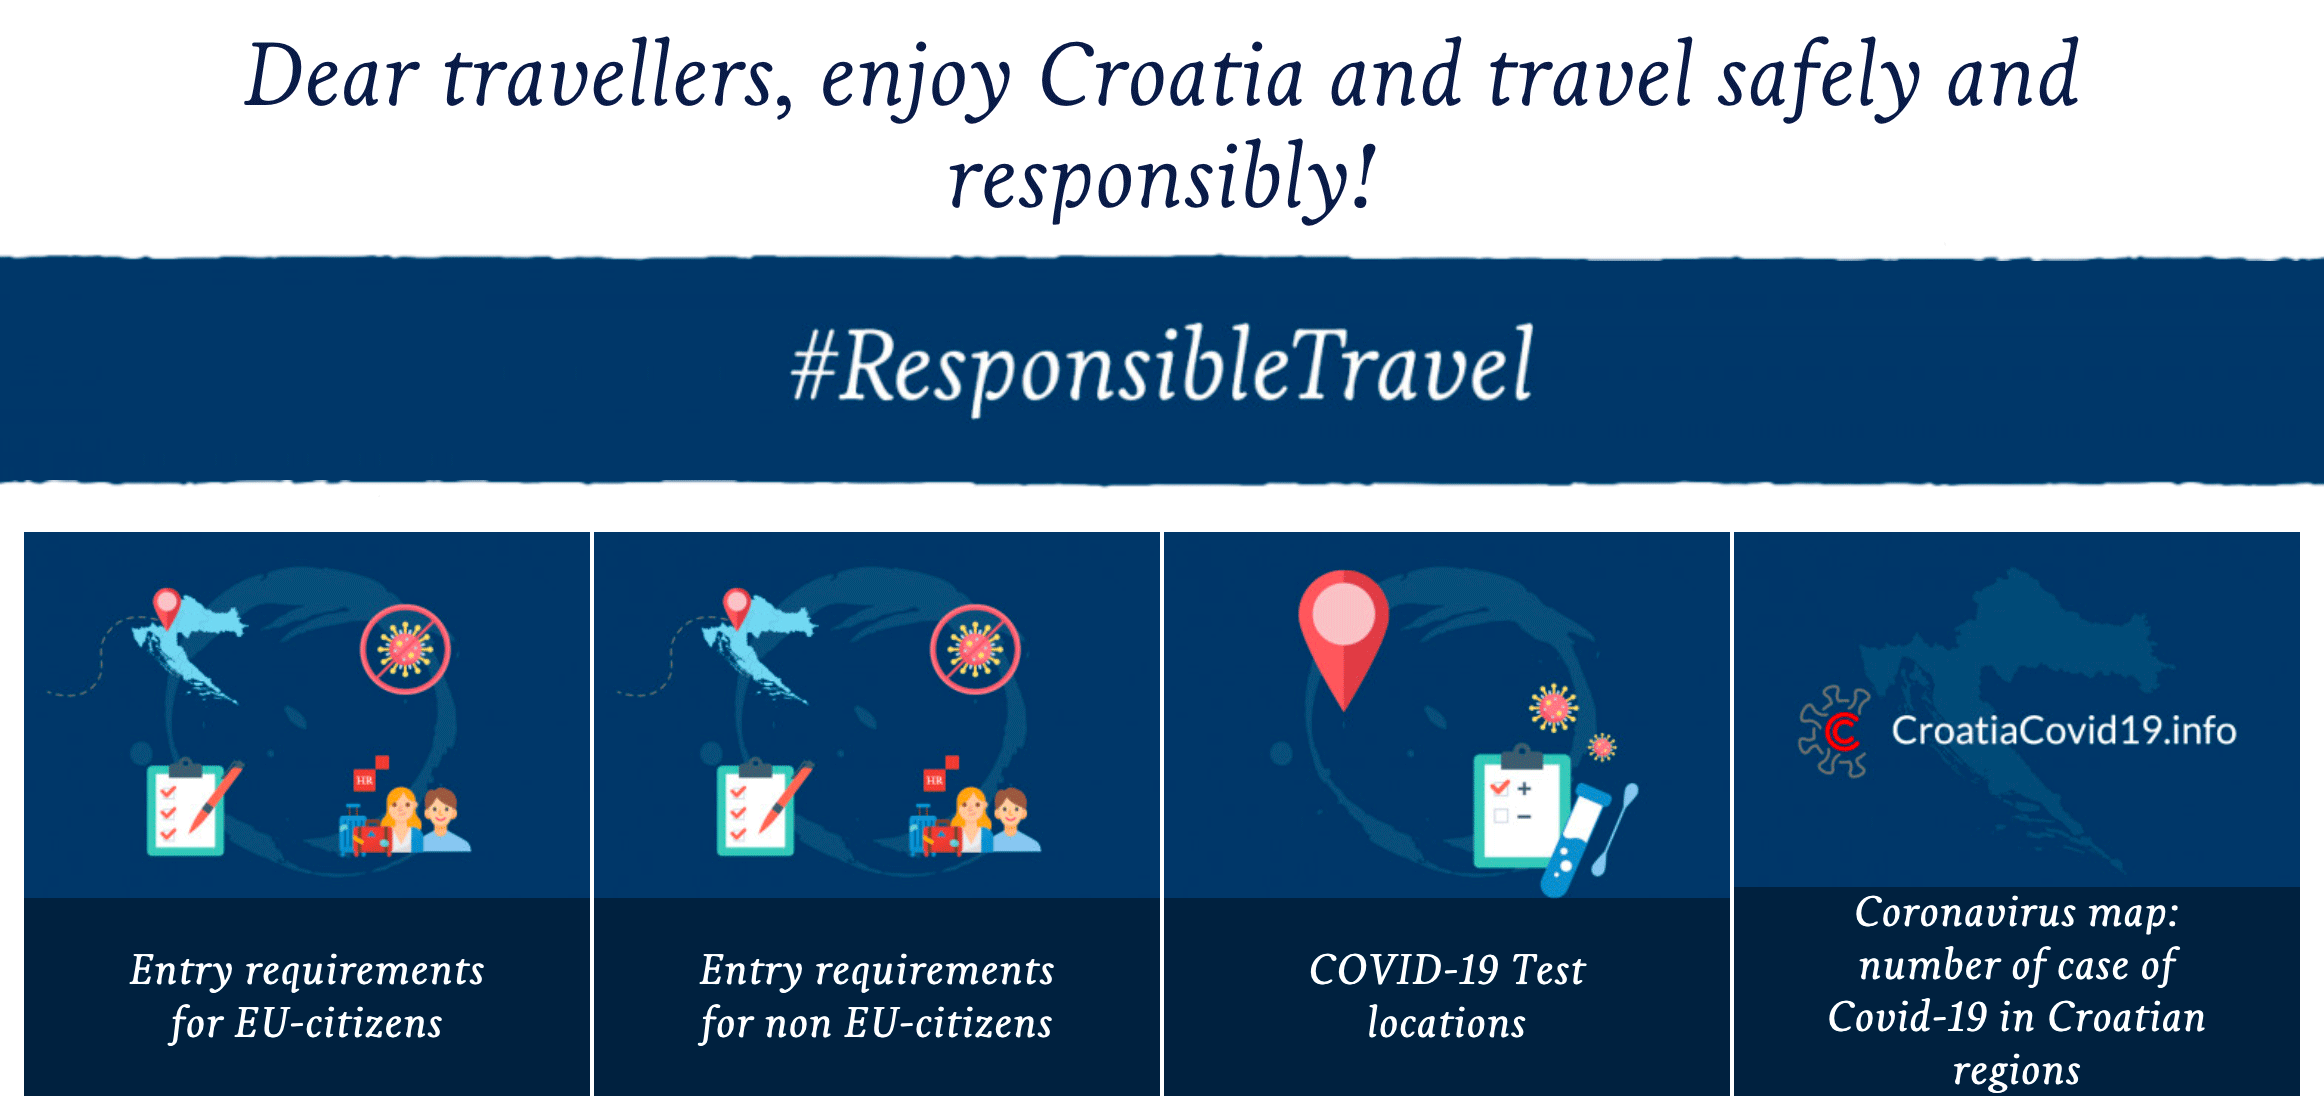 COVID-19 test locations in Croatia